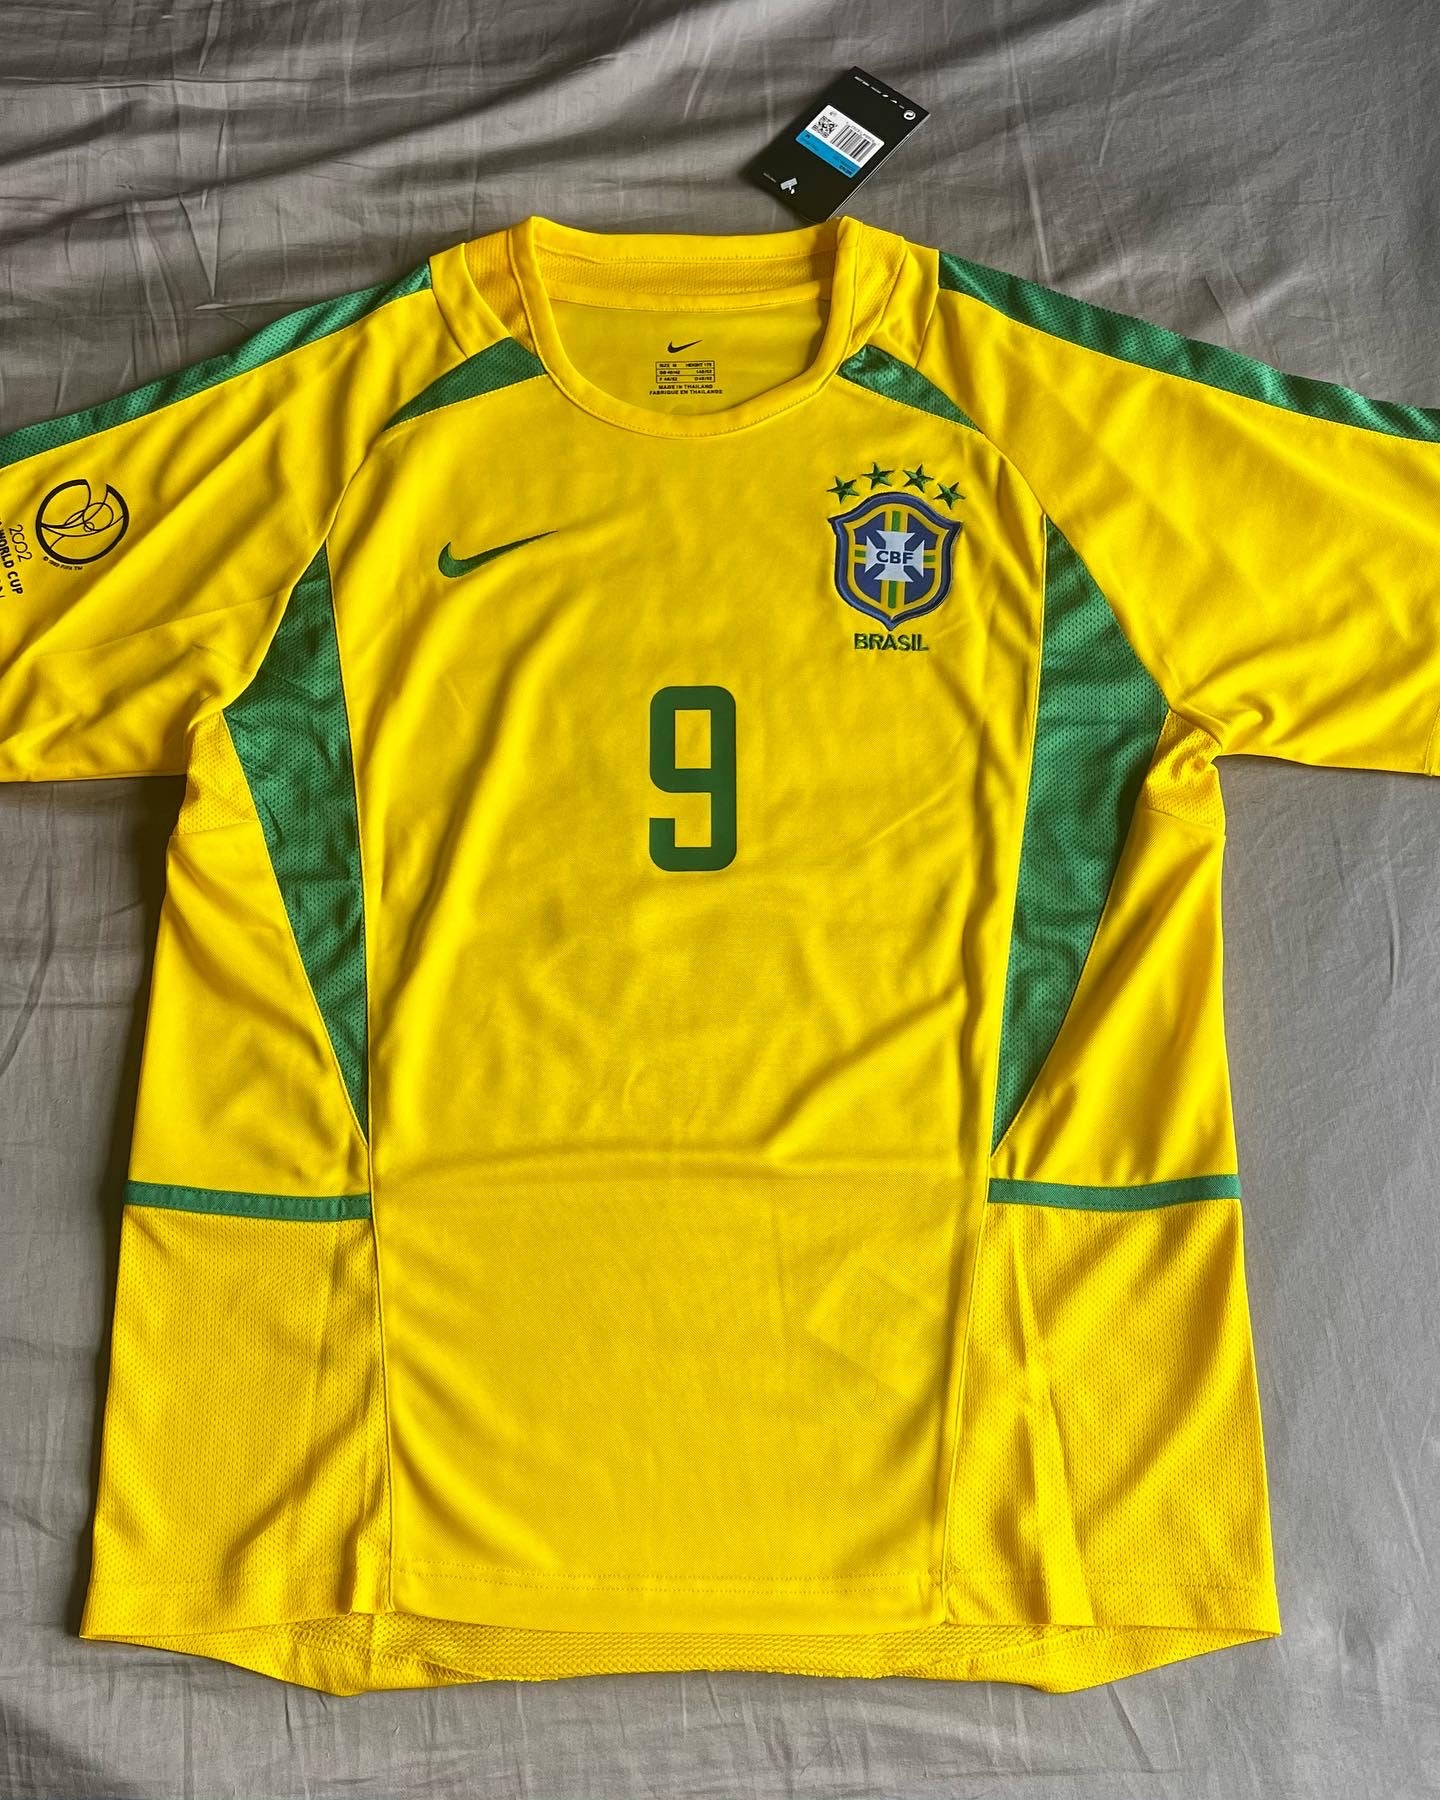 Brazil 2002 Home jersey